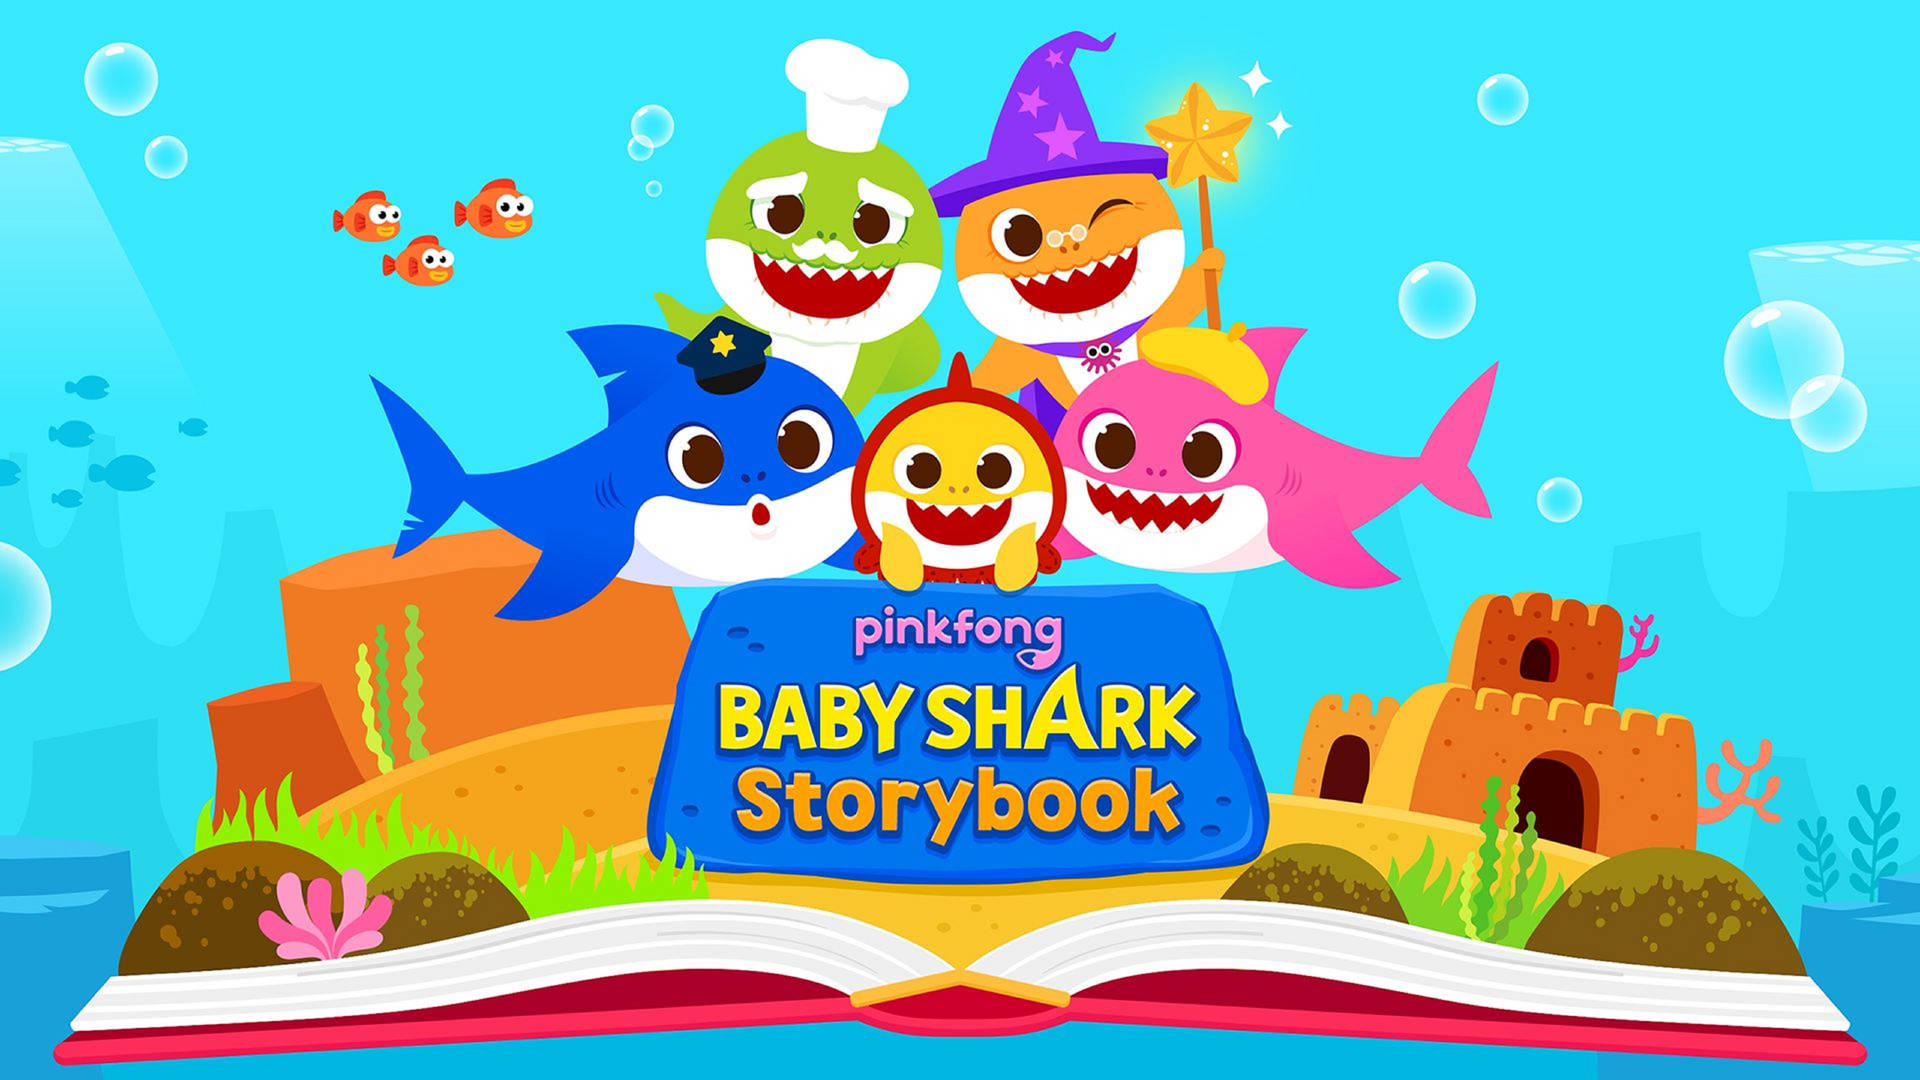 Pinkfong Baby Shark Storybook Wallpaper